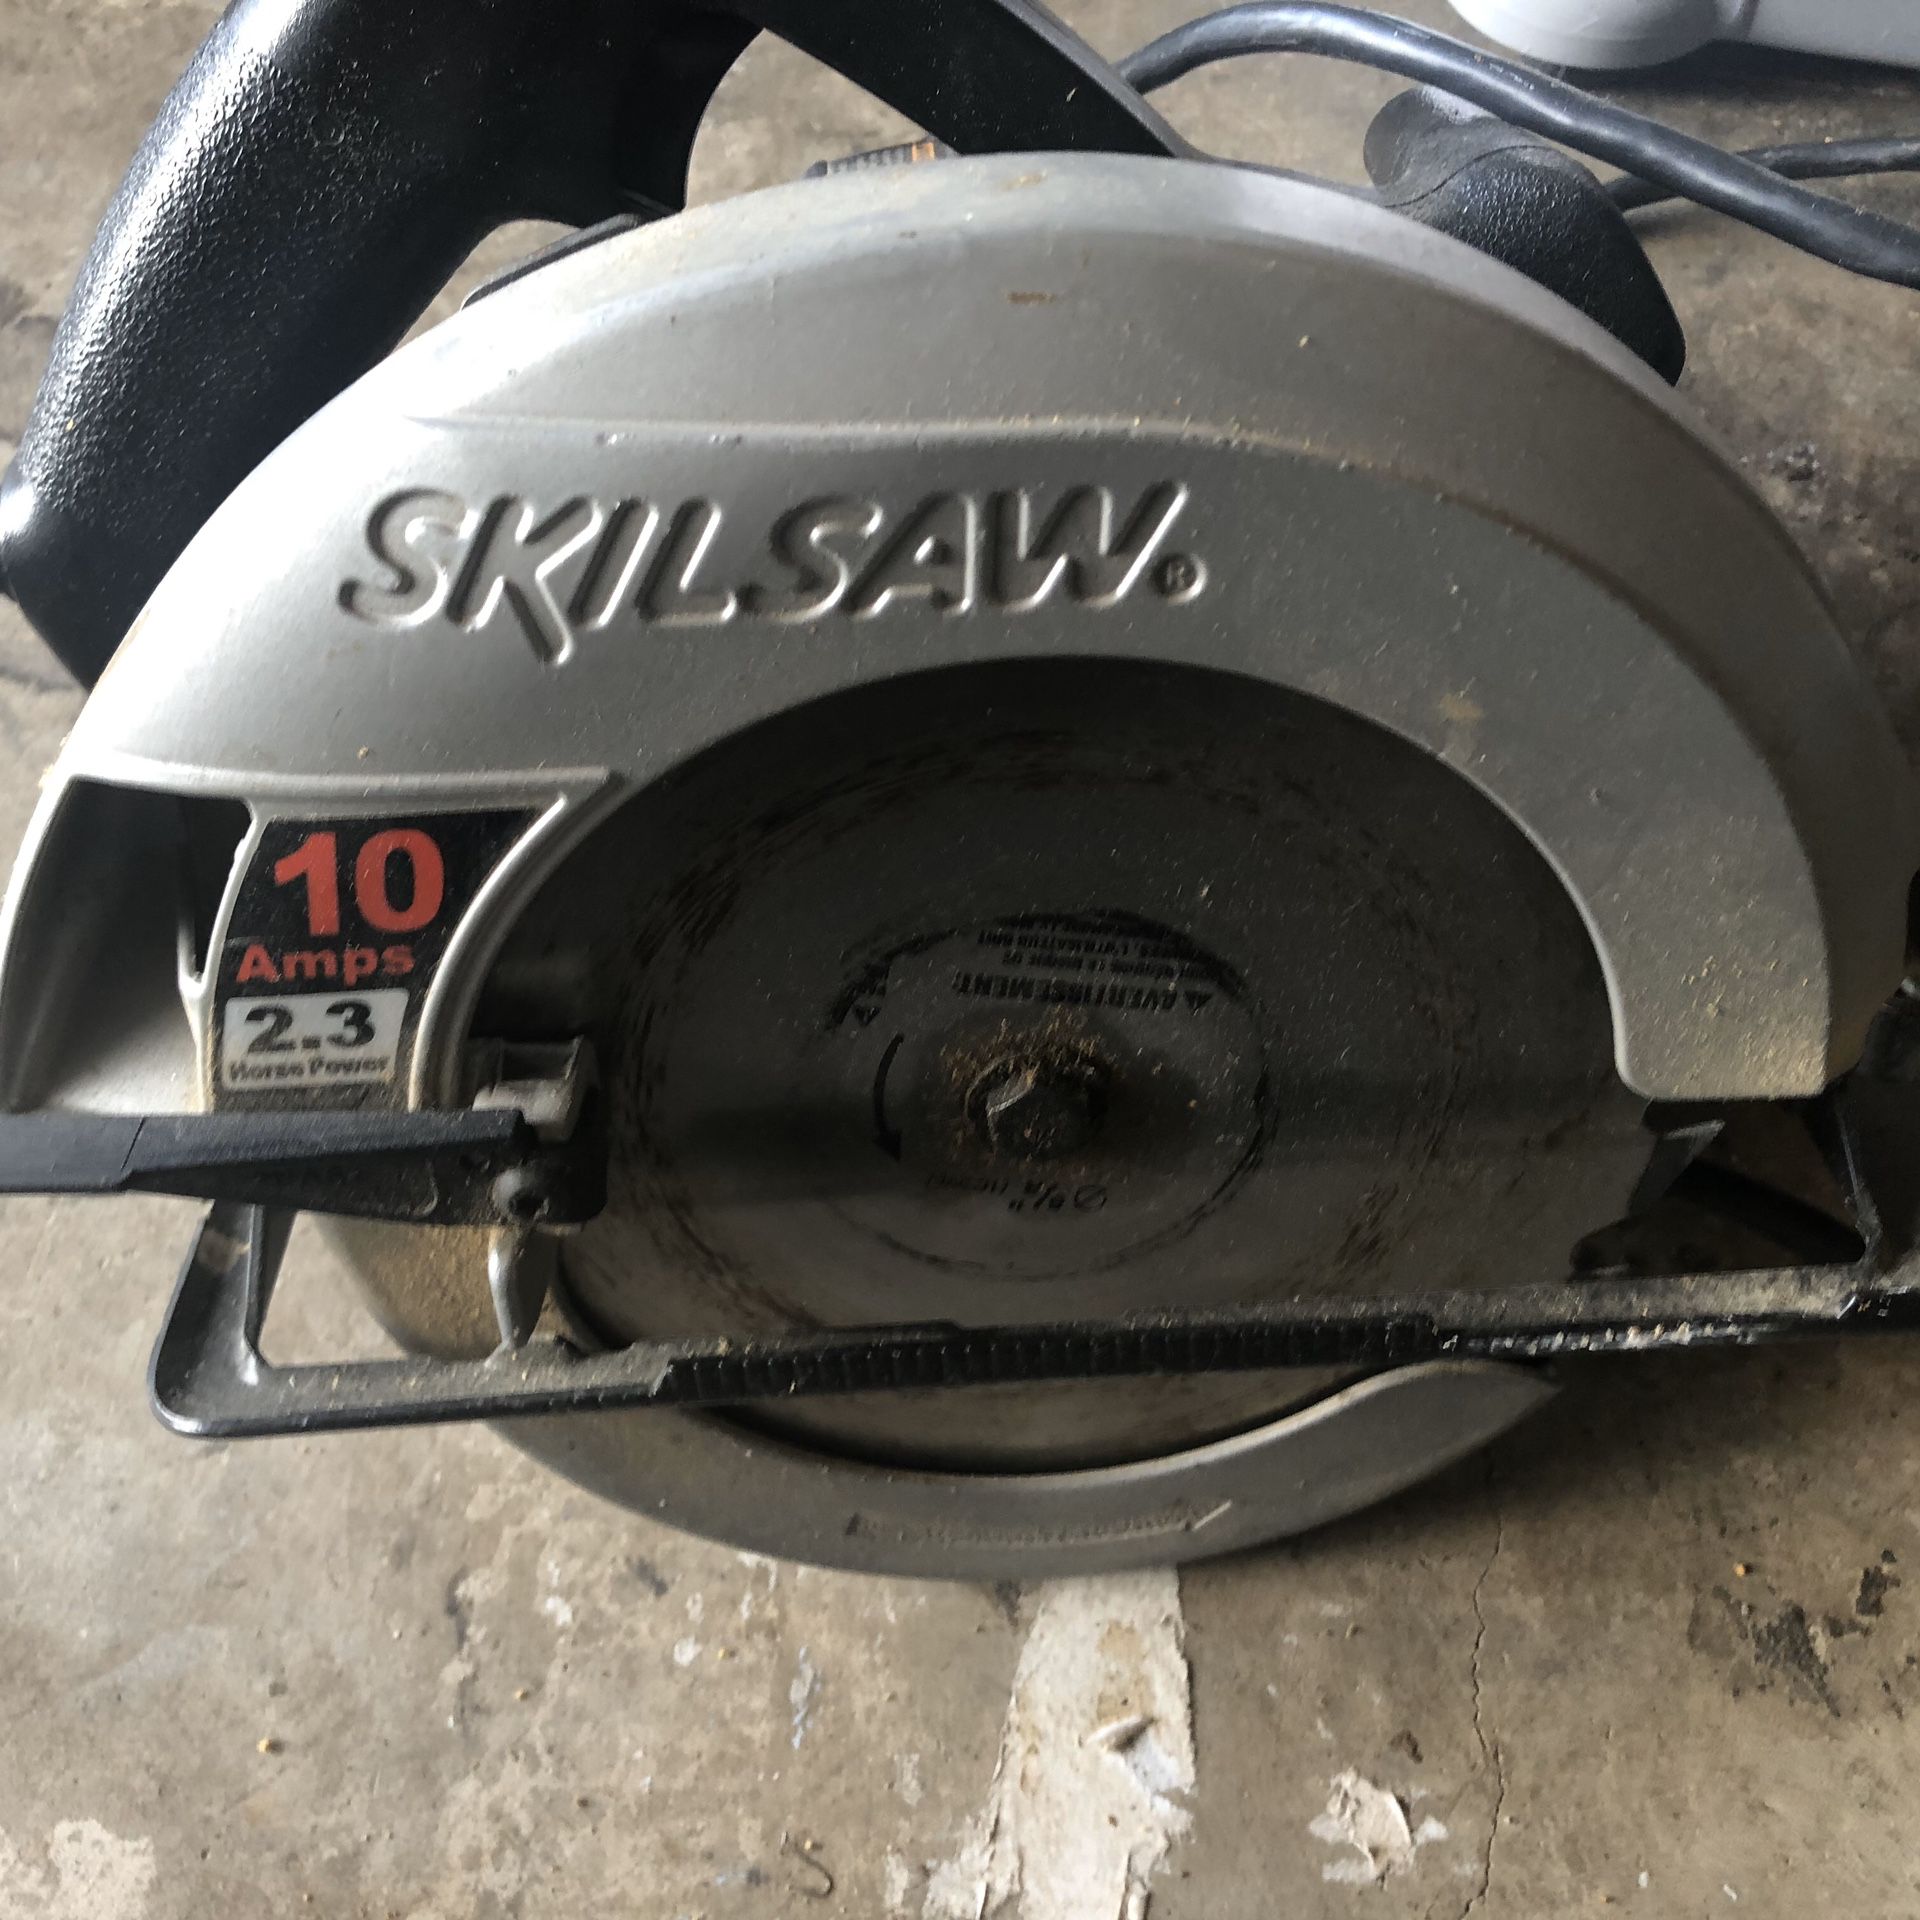 Skillsaw 10amp circular saw